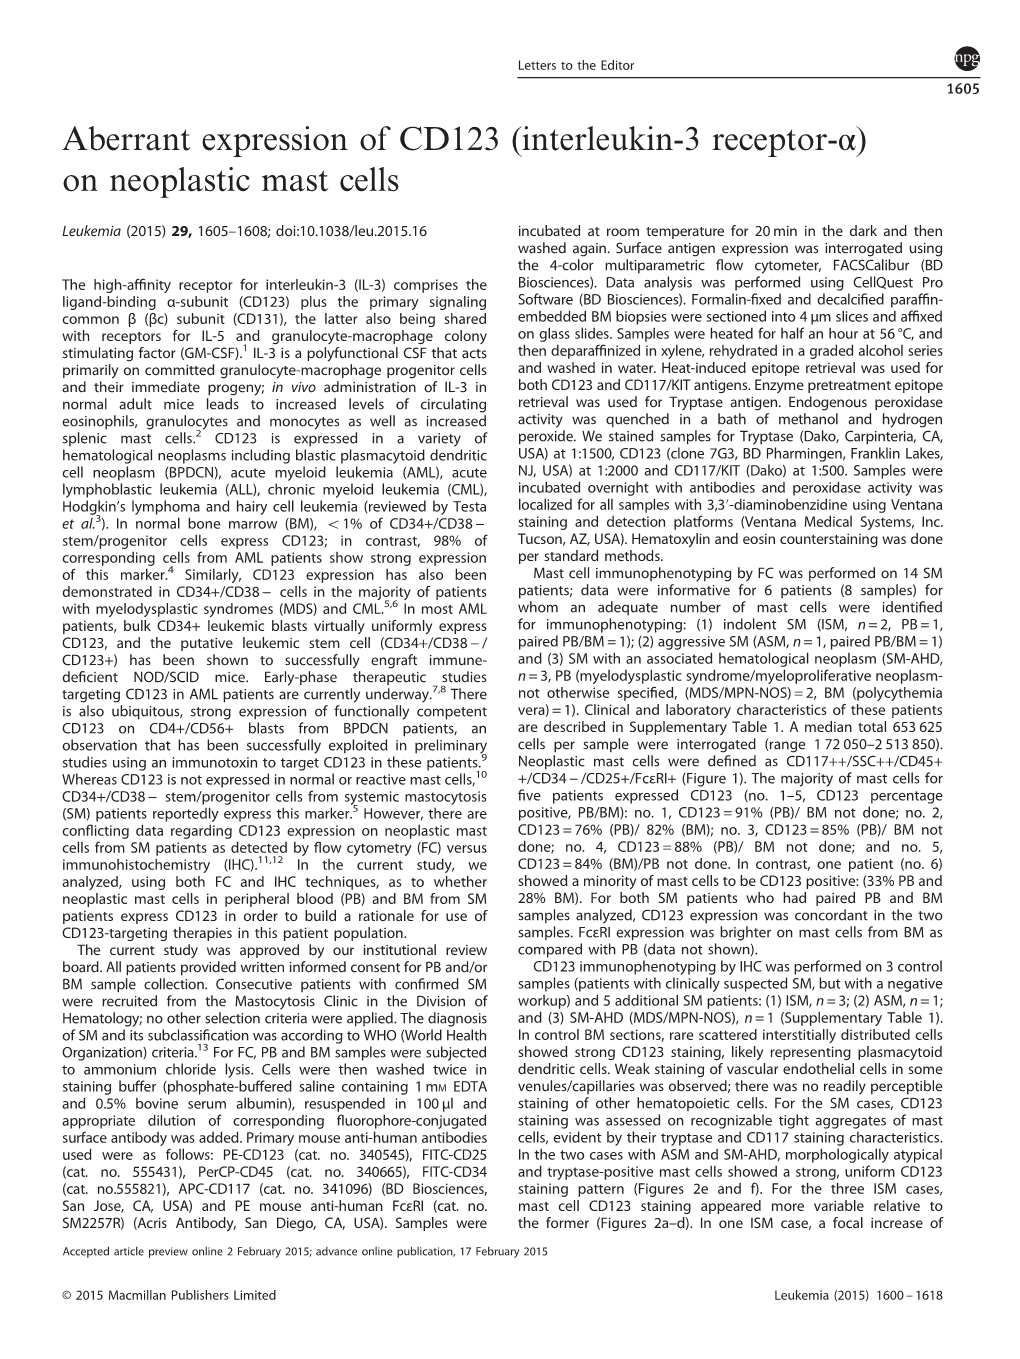 Aberrant Expression of CD123 (Interleukin-3 Receptor-Α) on Neoplastic Mast Cells